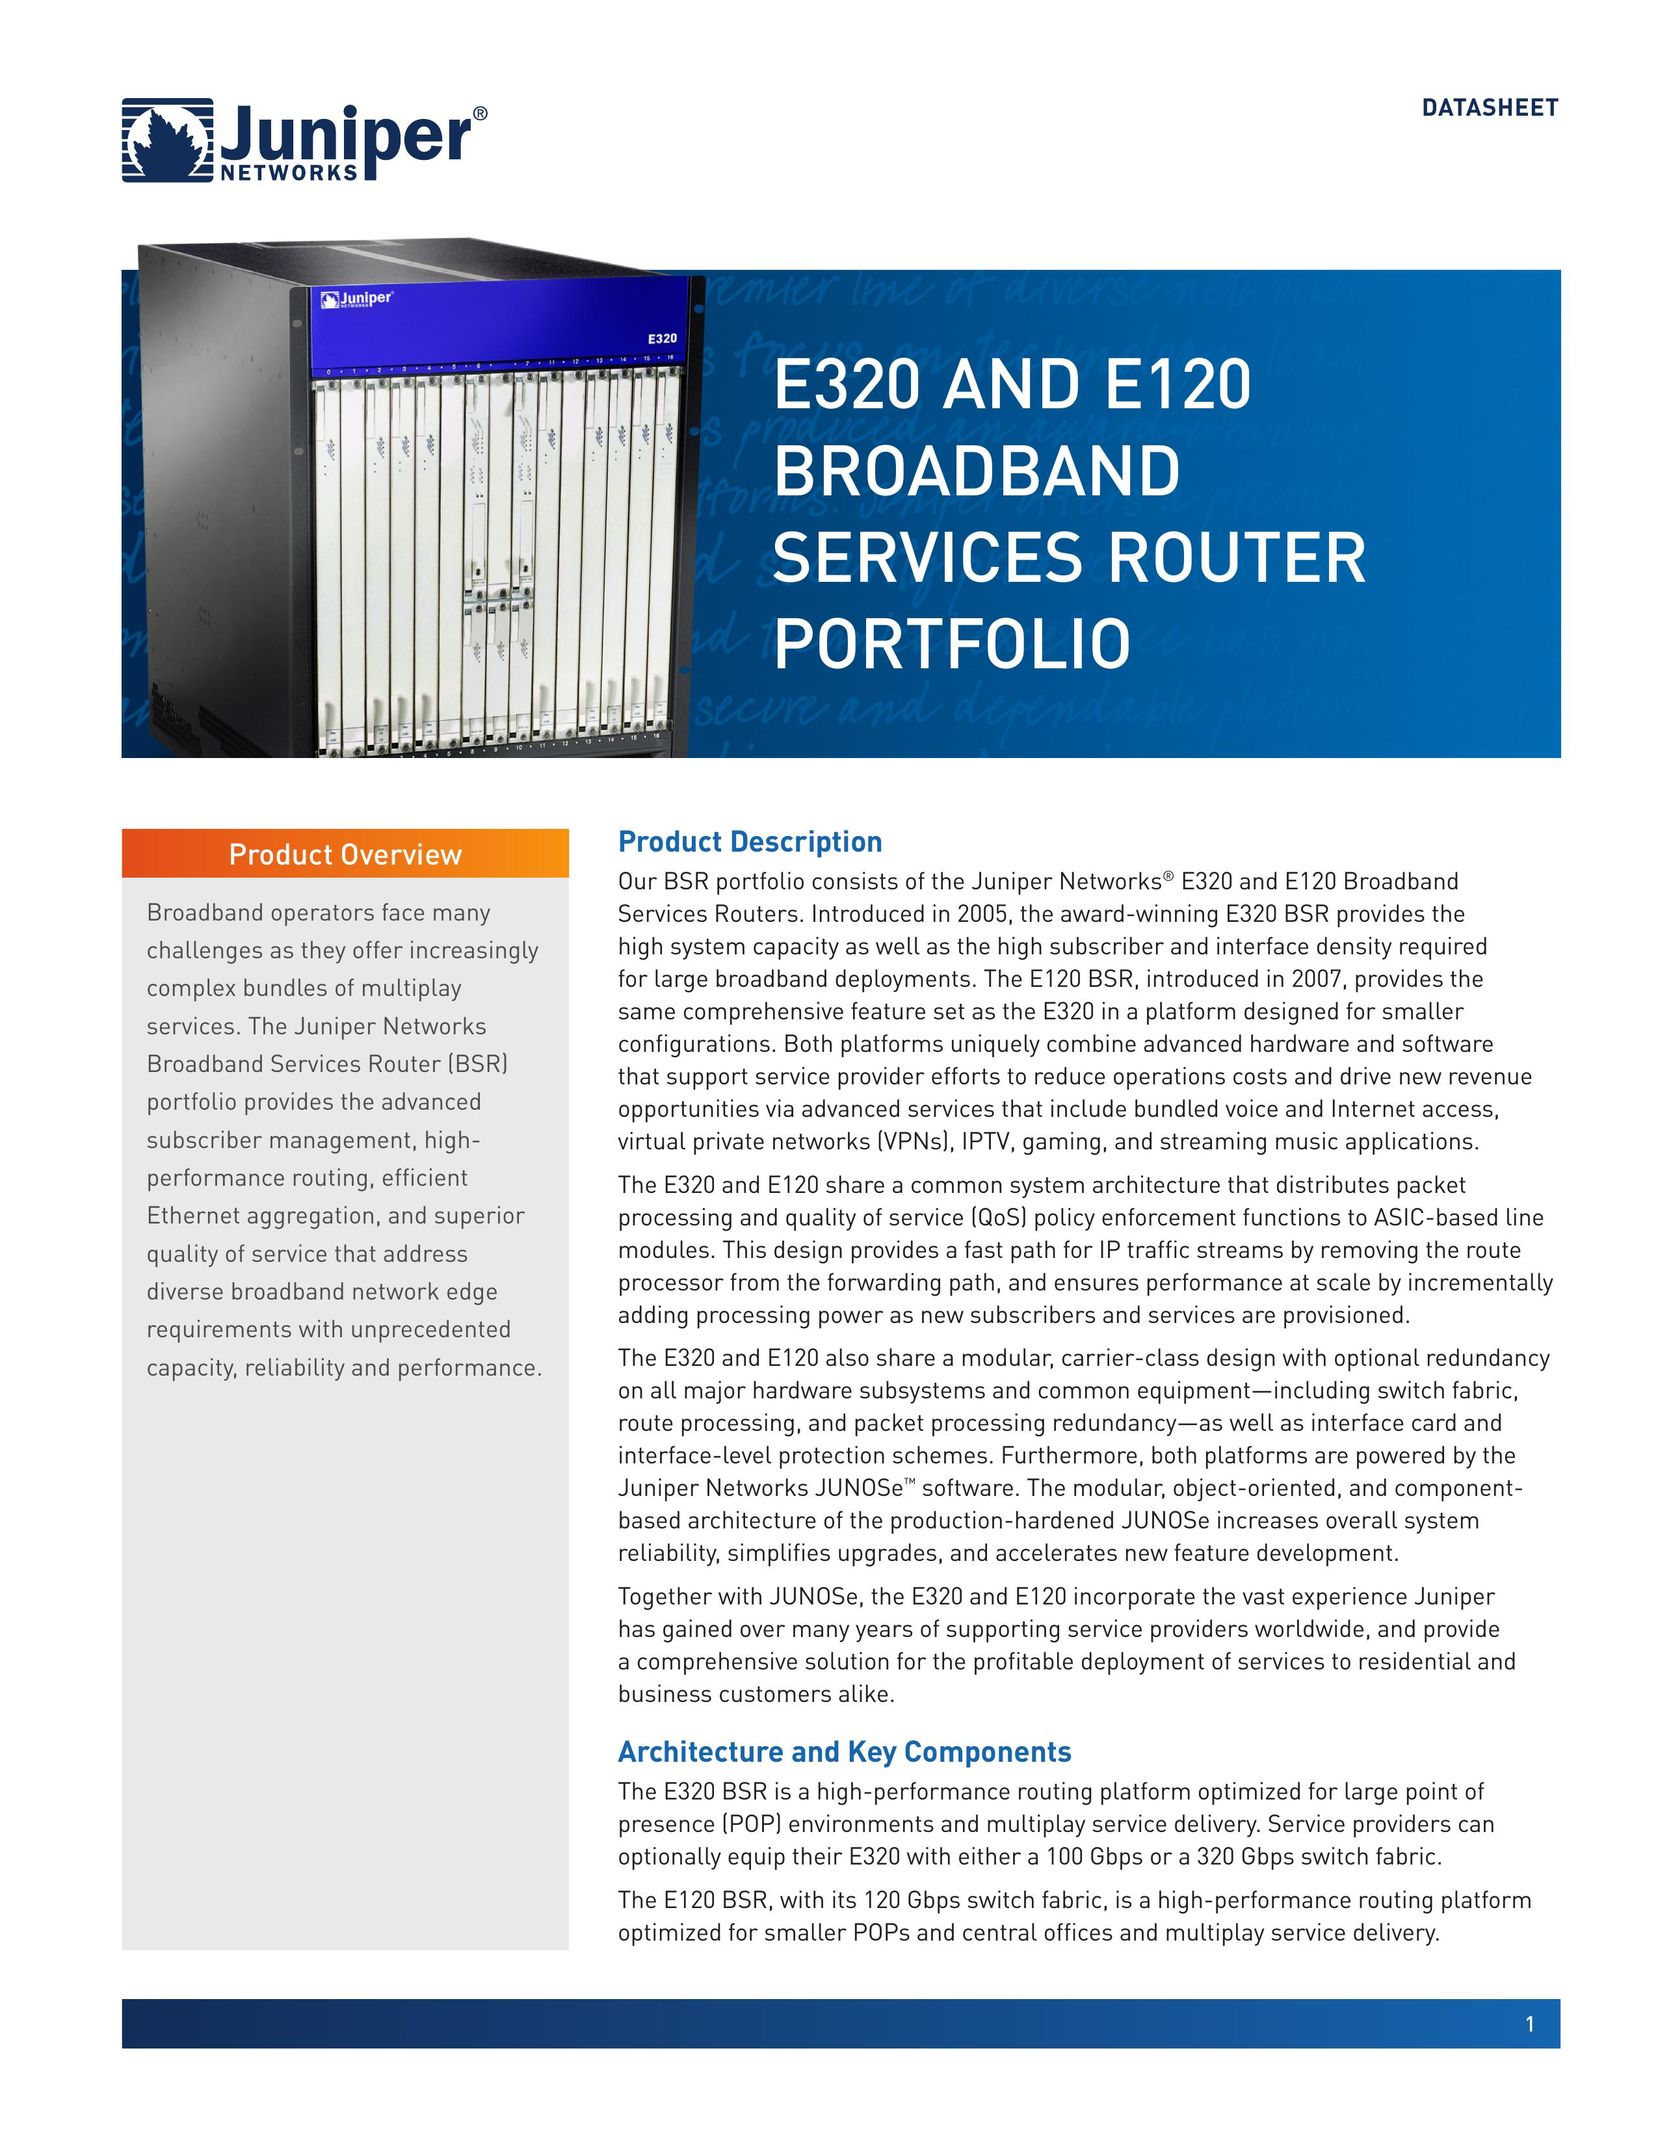 Juniper Networks E320 Network Router User Manual